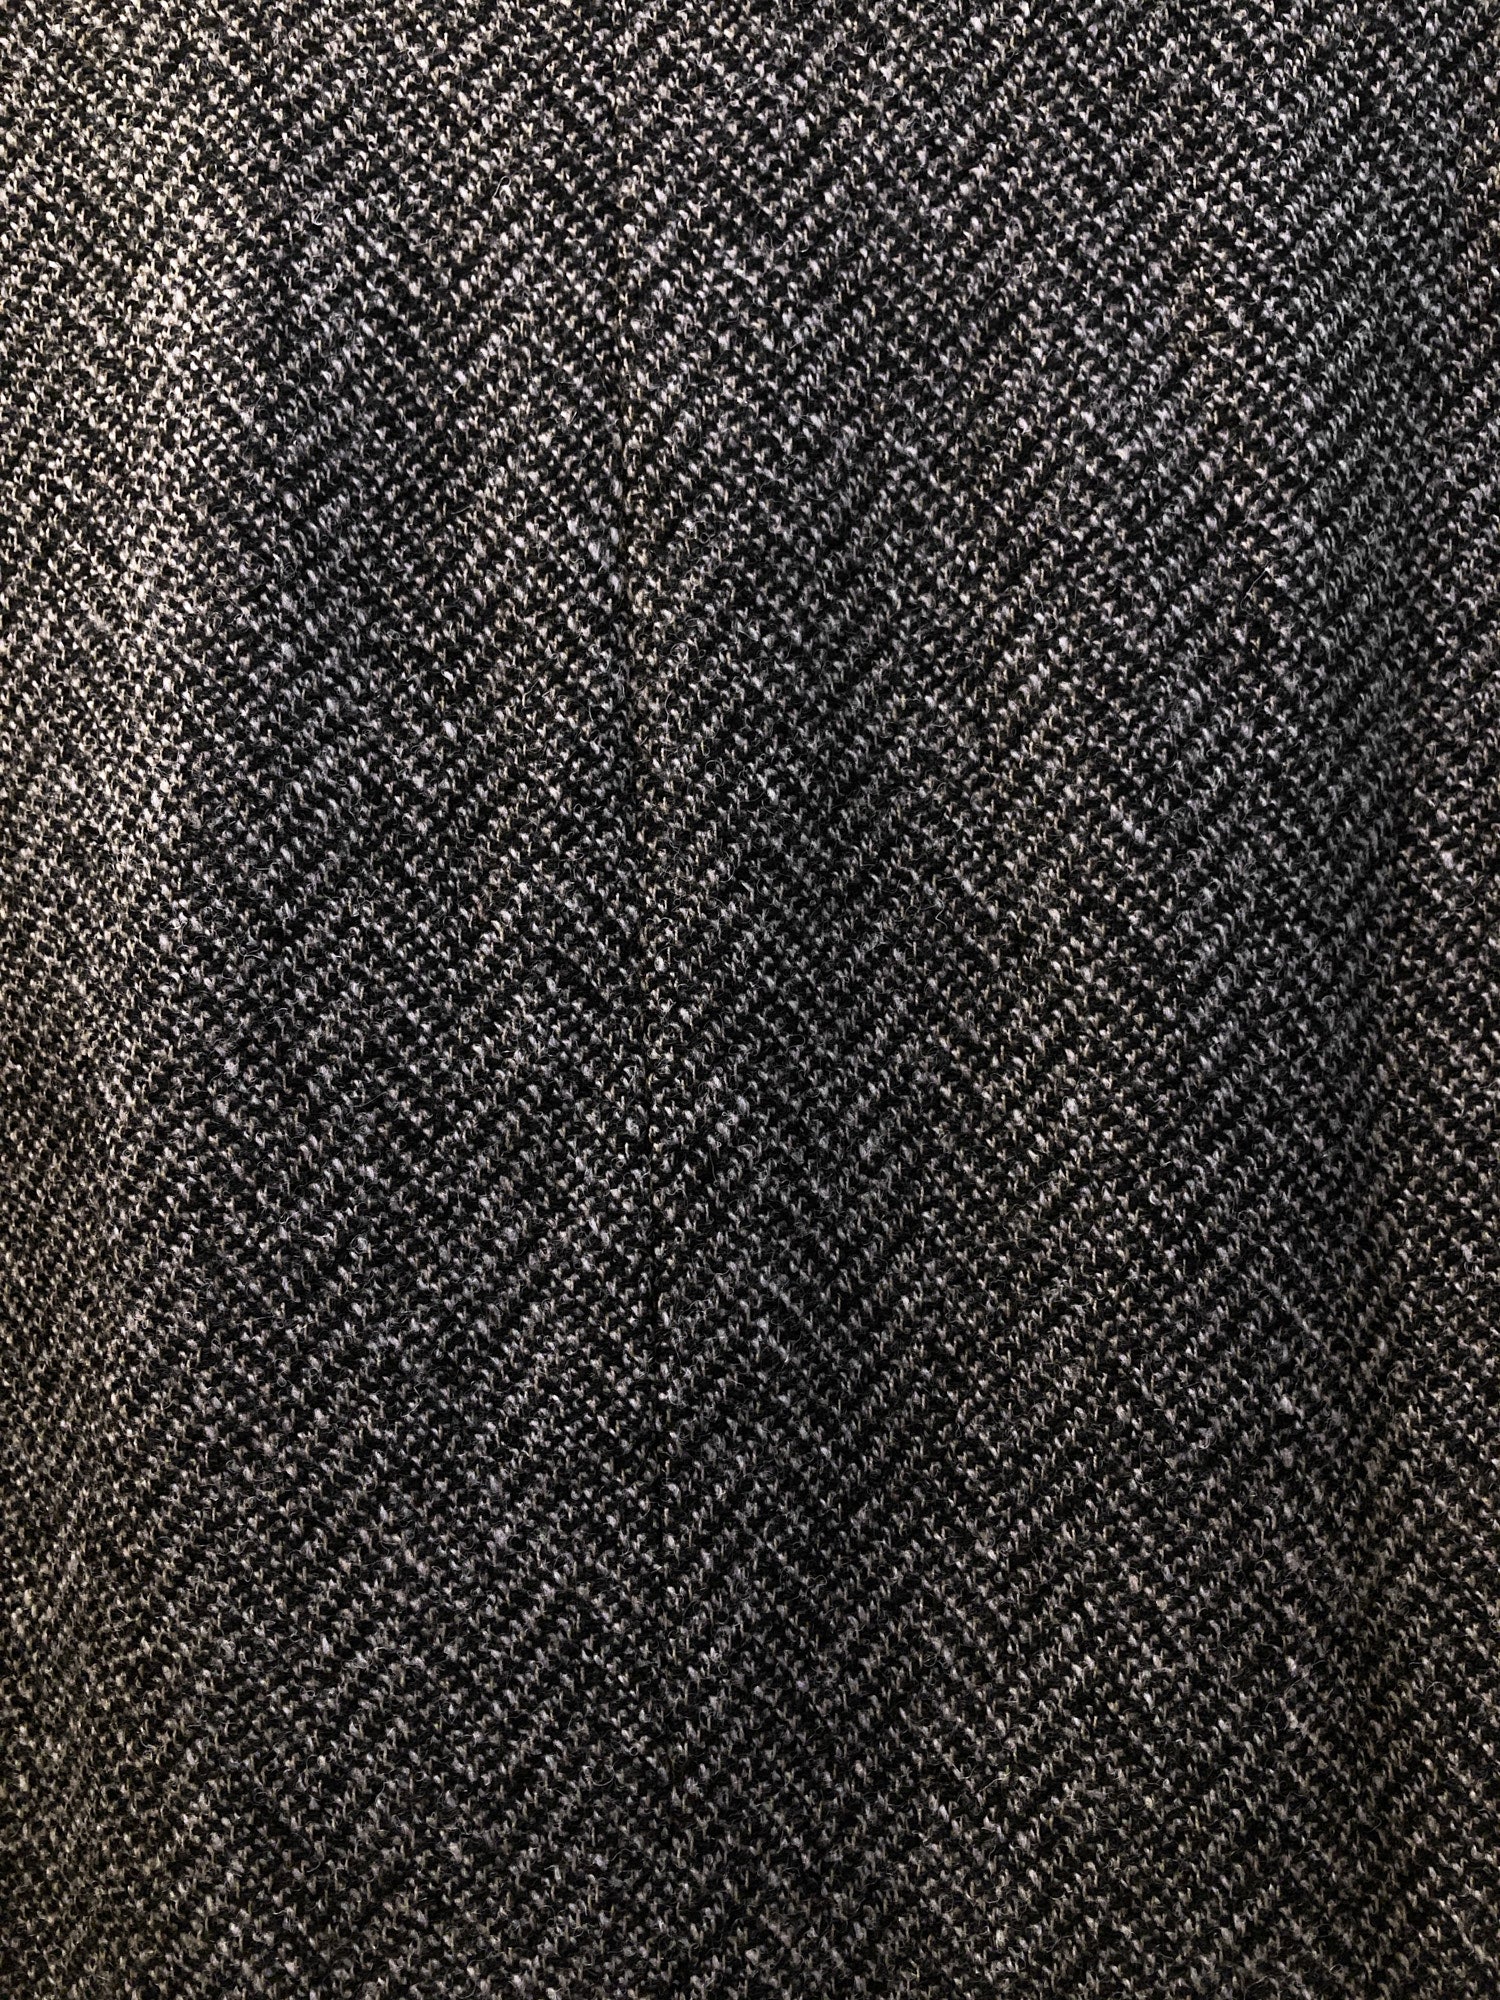 Jean Colonna grey brown herringbone wool poly pea coat - size 46